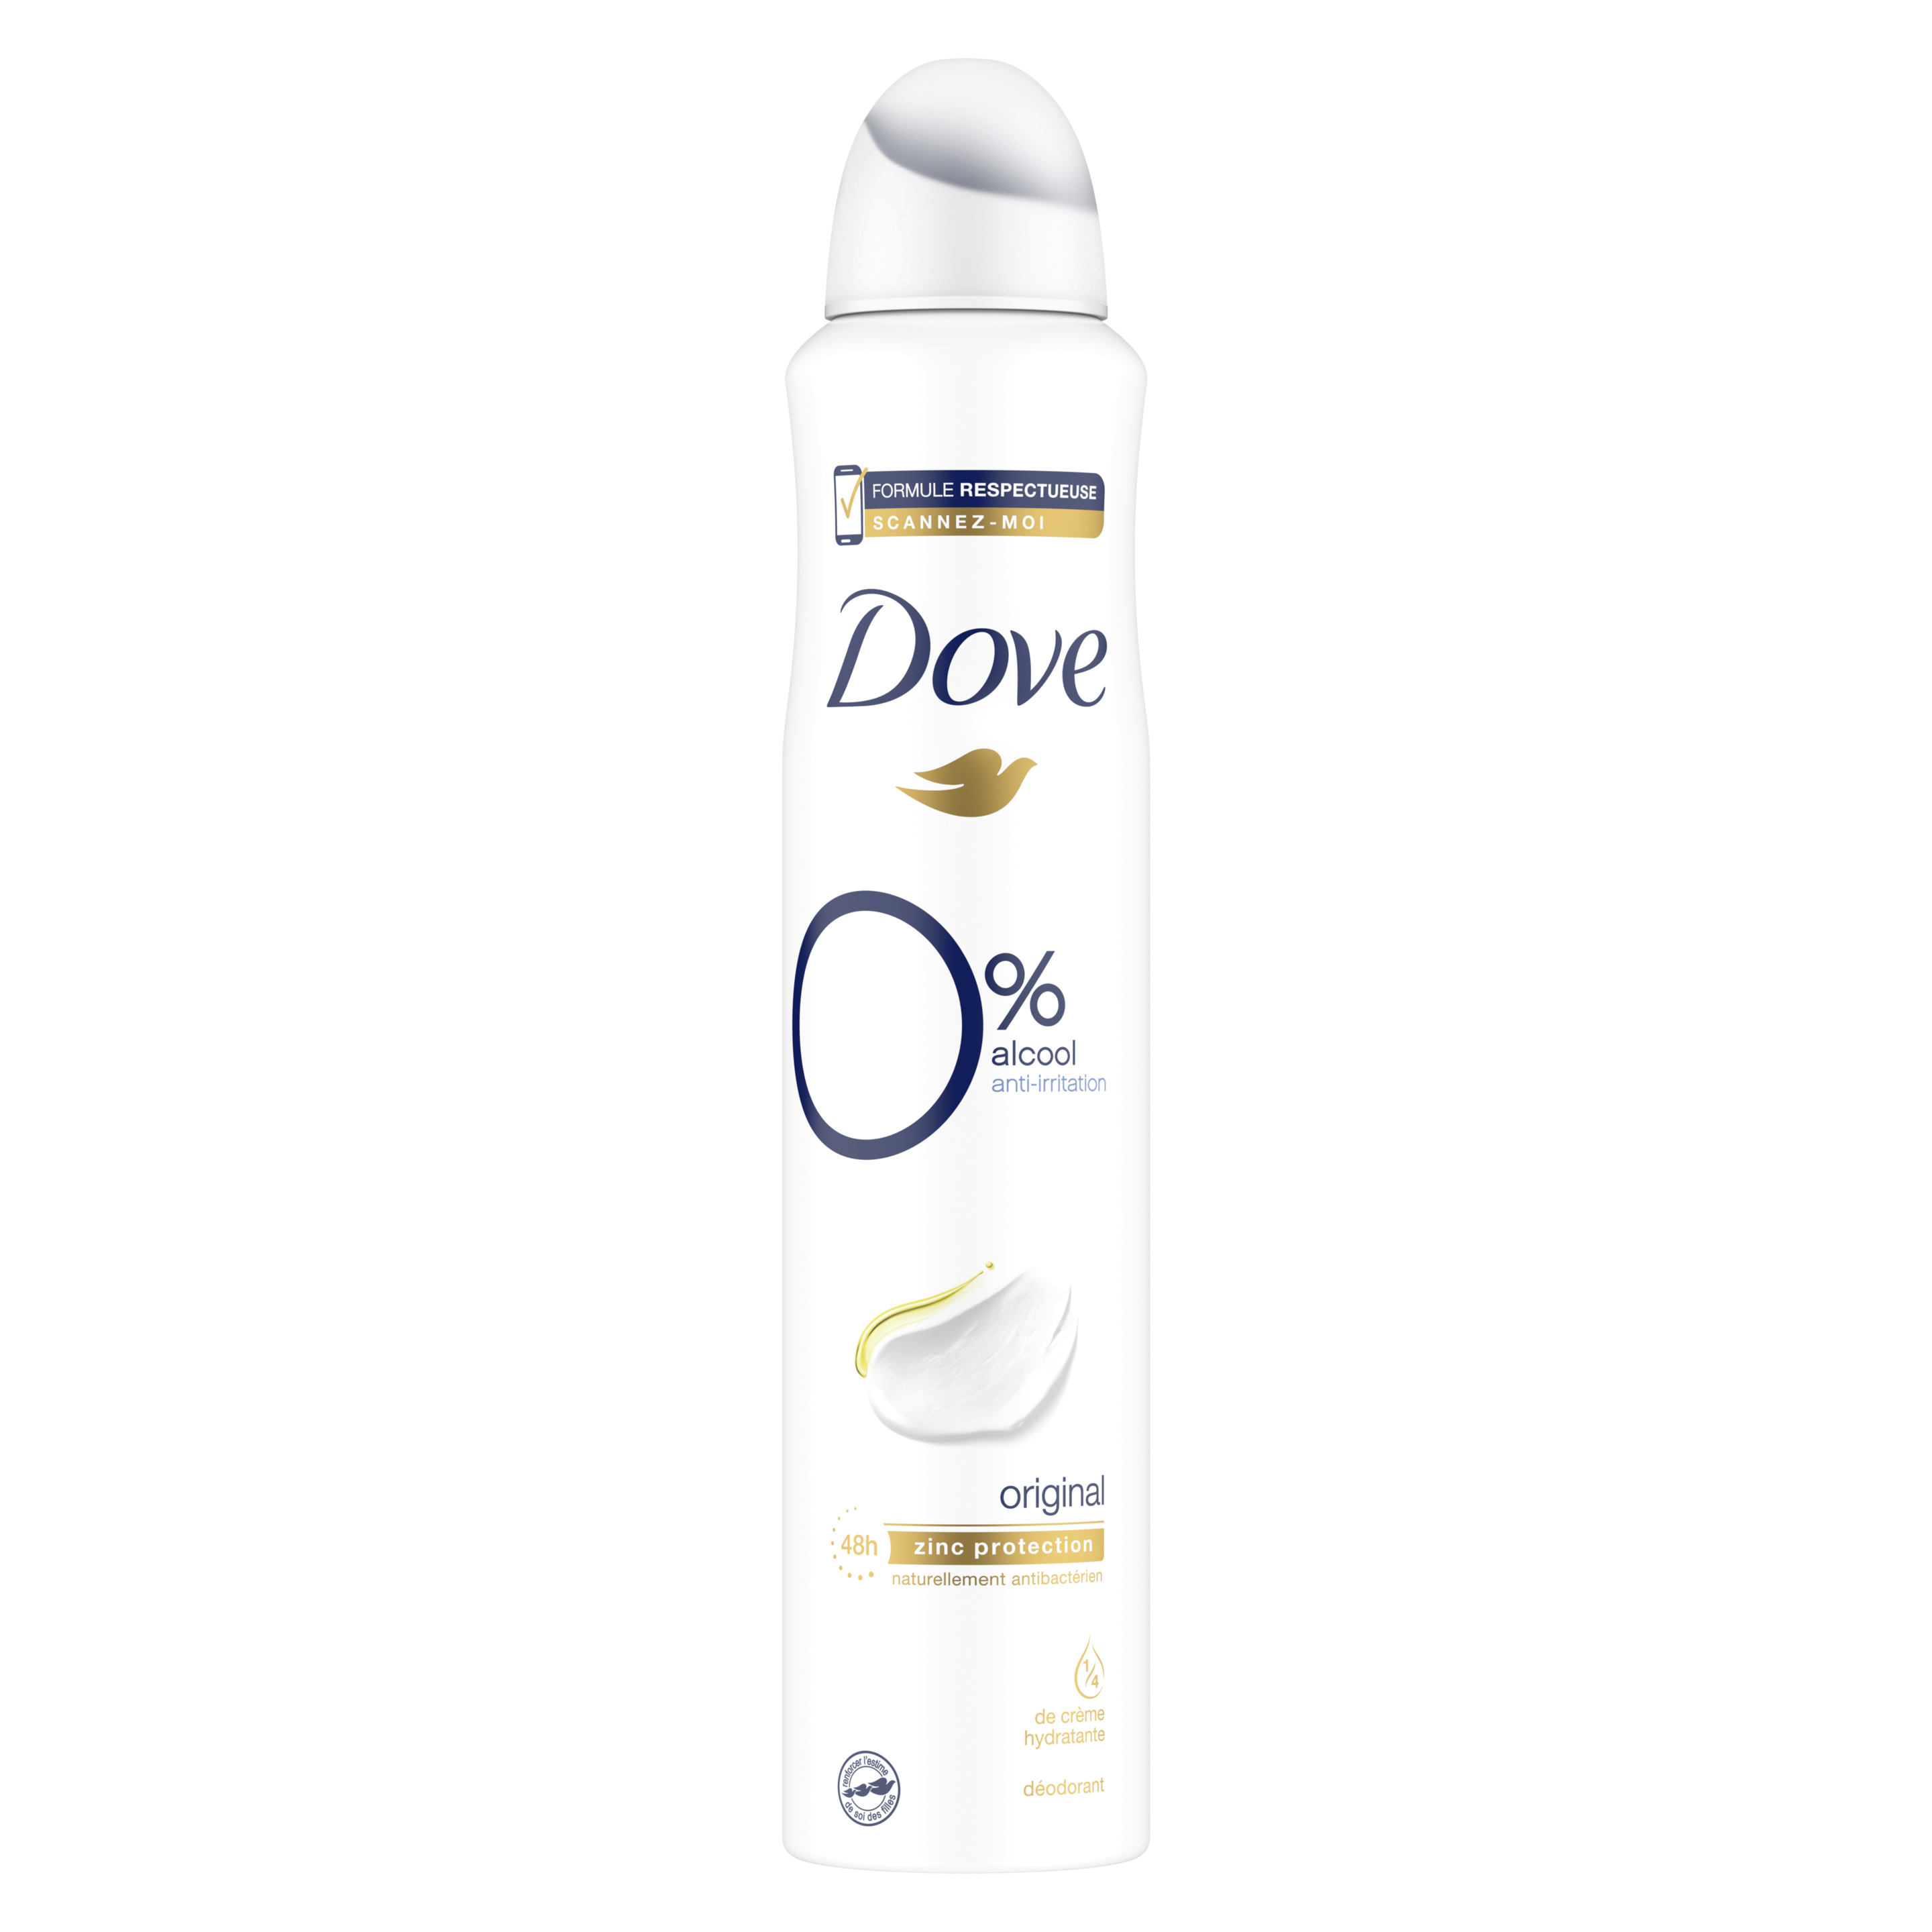 Dove Deodorant Original 0% alcool  Spray 200ml